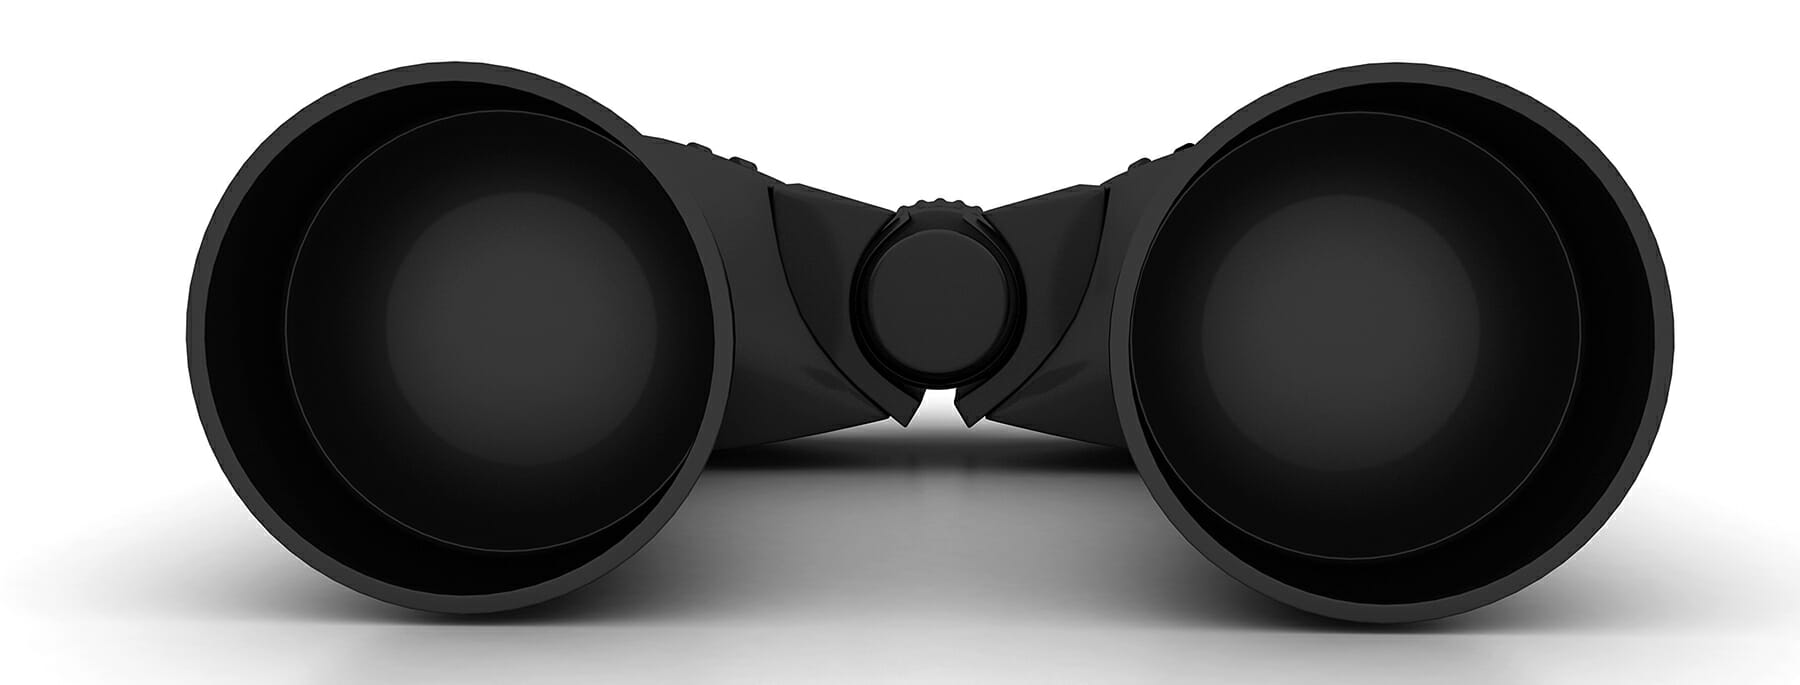 binoculars-seeing-money-concept_z1h2uu_d.jpg